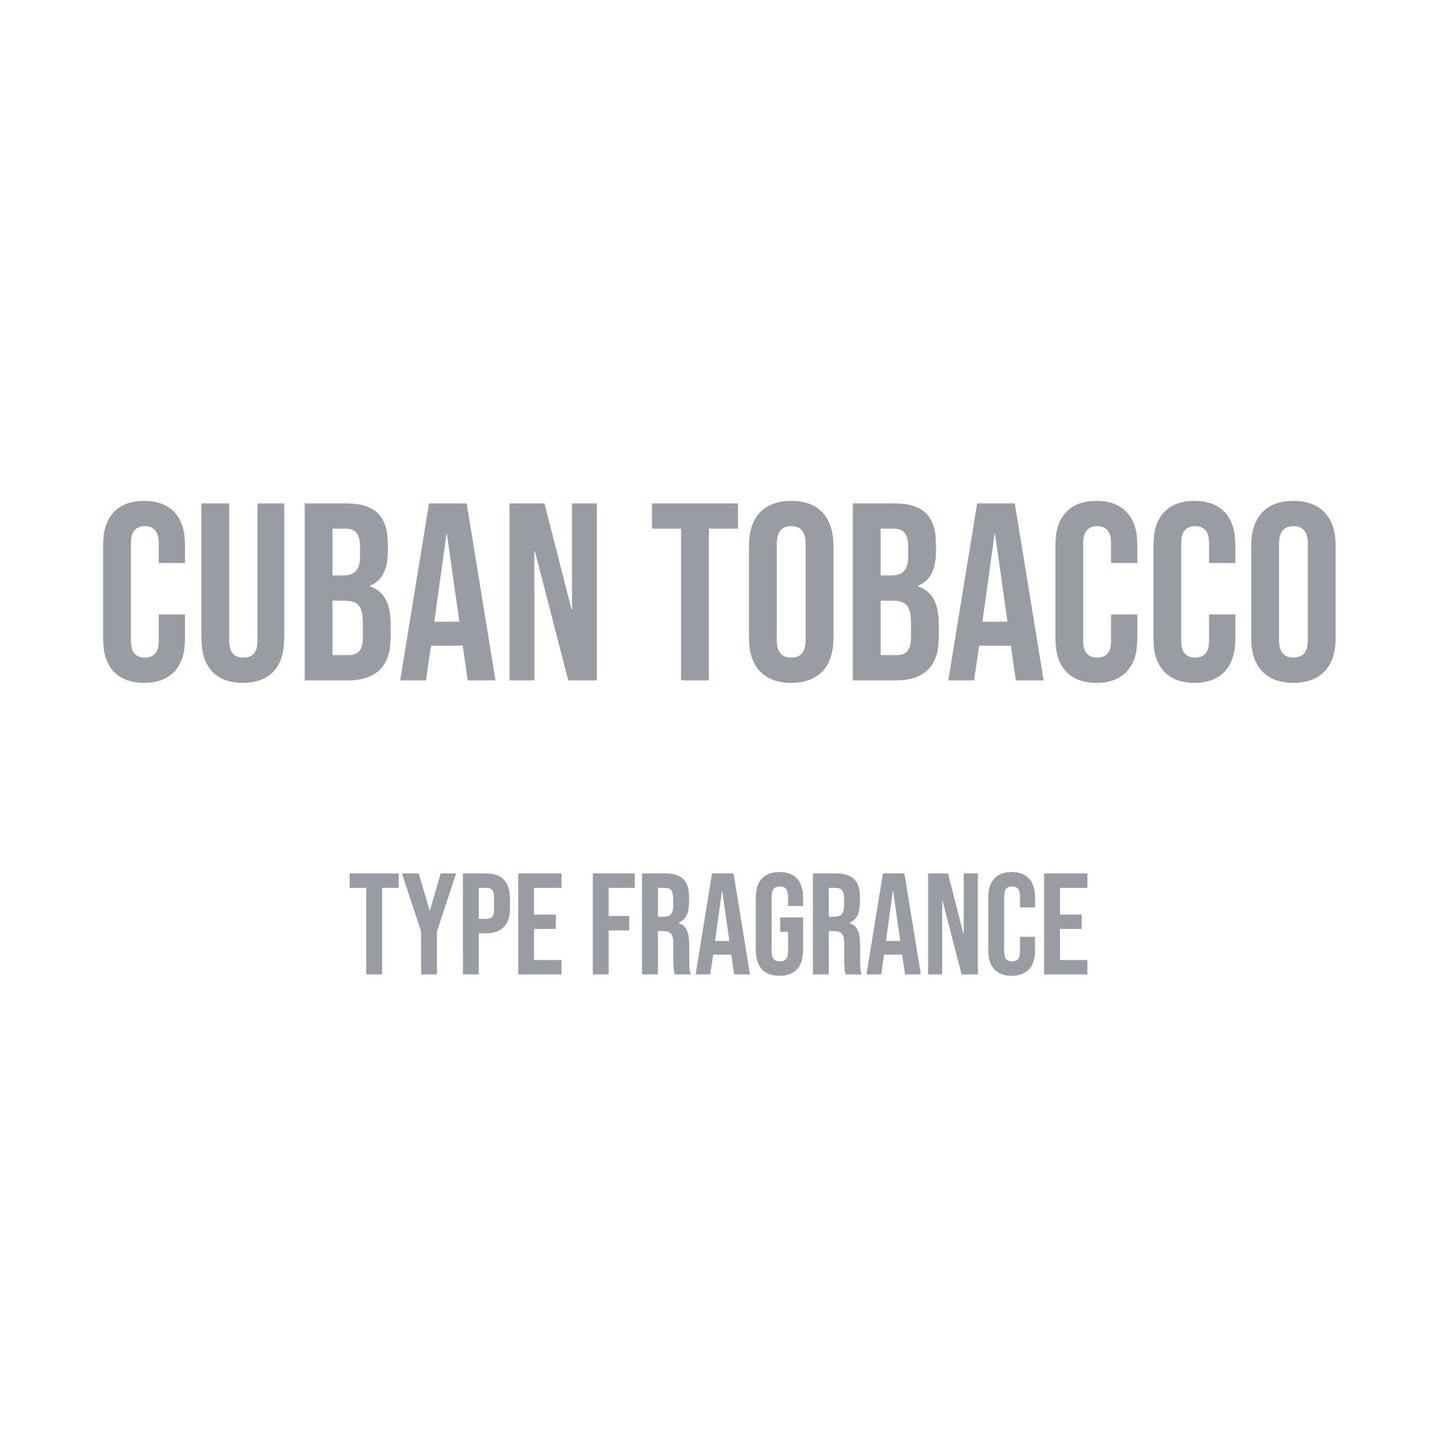 Cuban Tobacco Type Fragrance